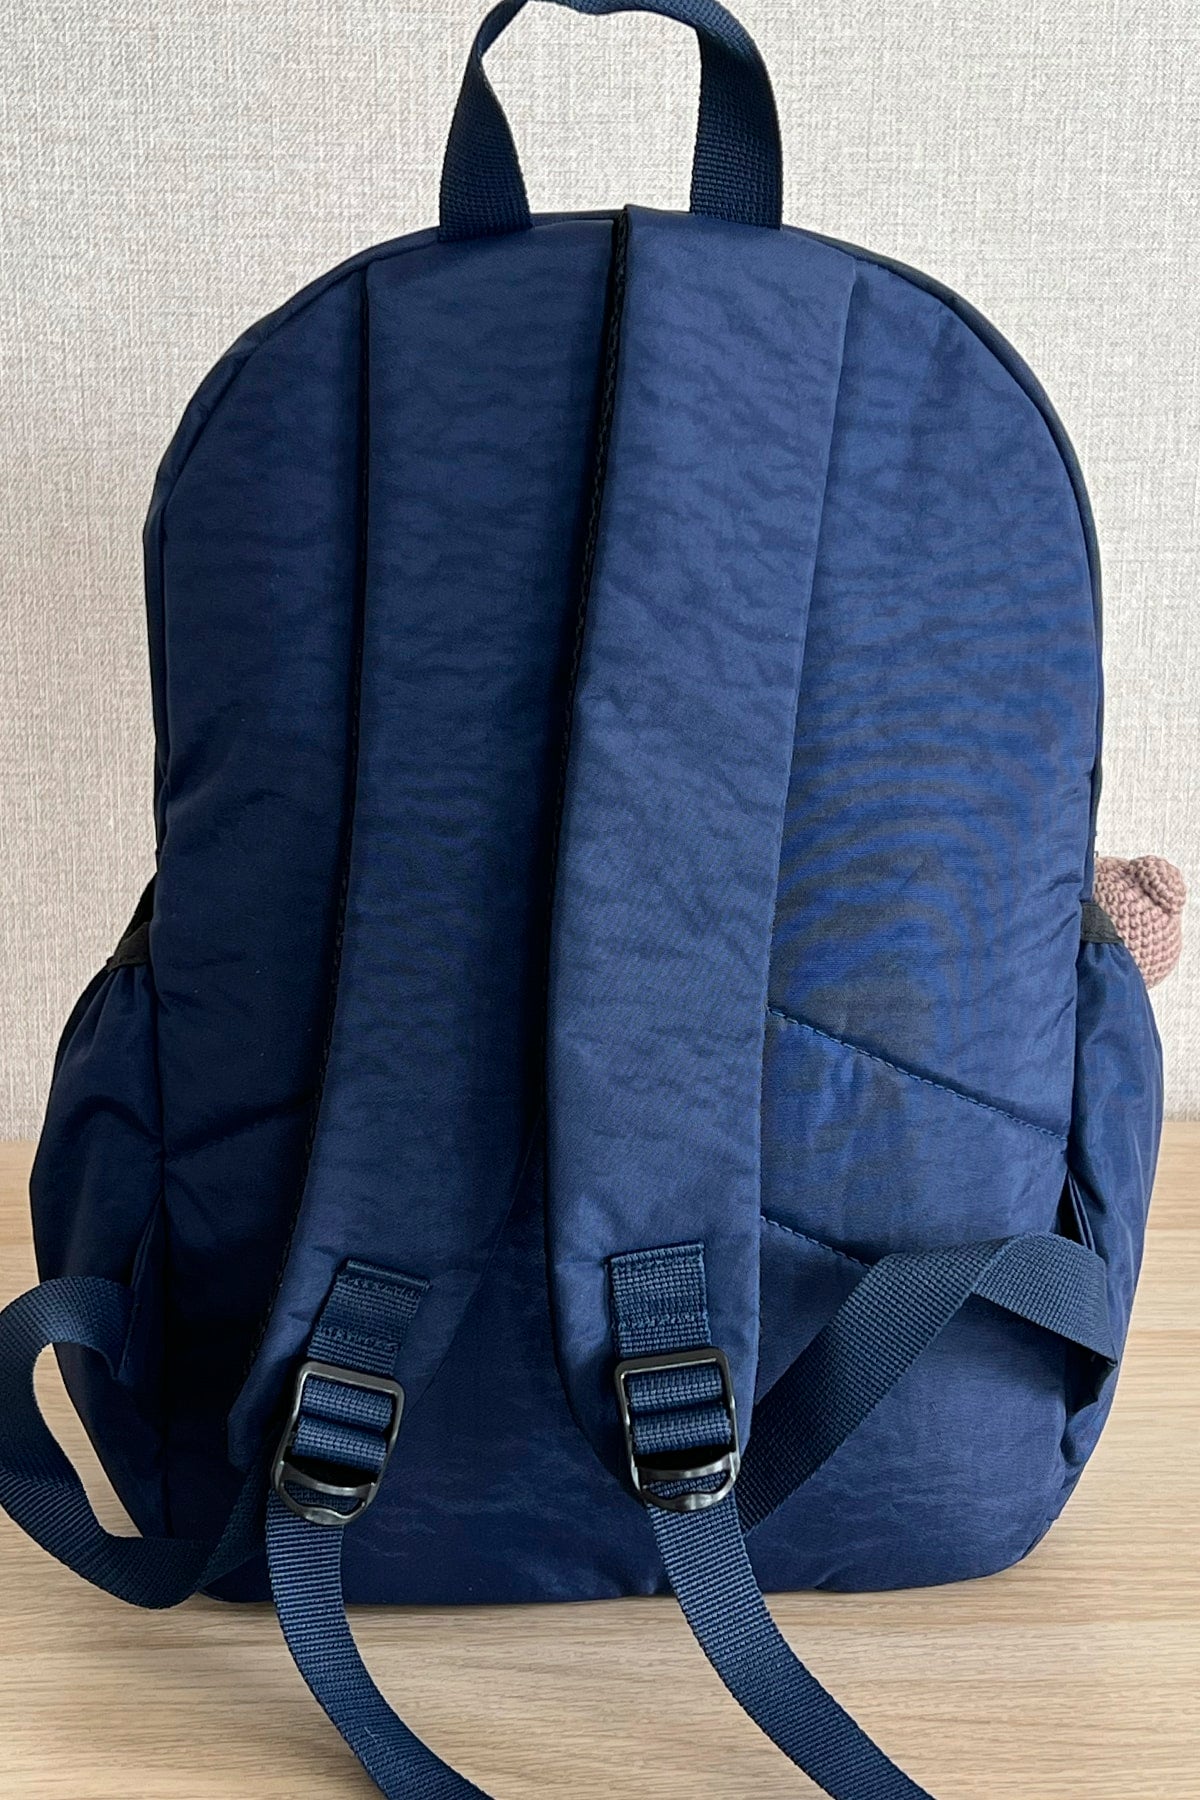 Dark Navy Blue Backpack School Bag 14 Inch Laptop Bag Duomino 18 lt 40 X 30 X 15 cm